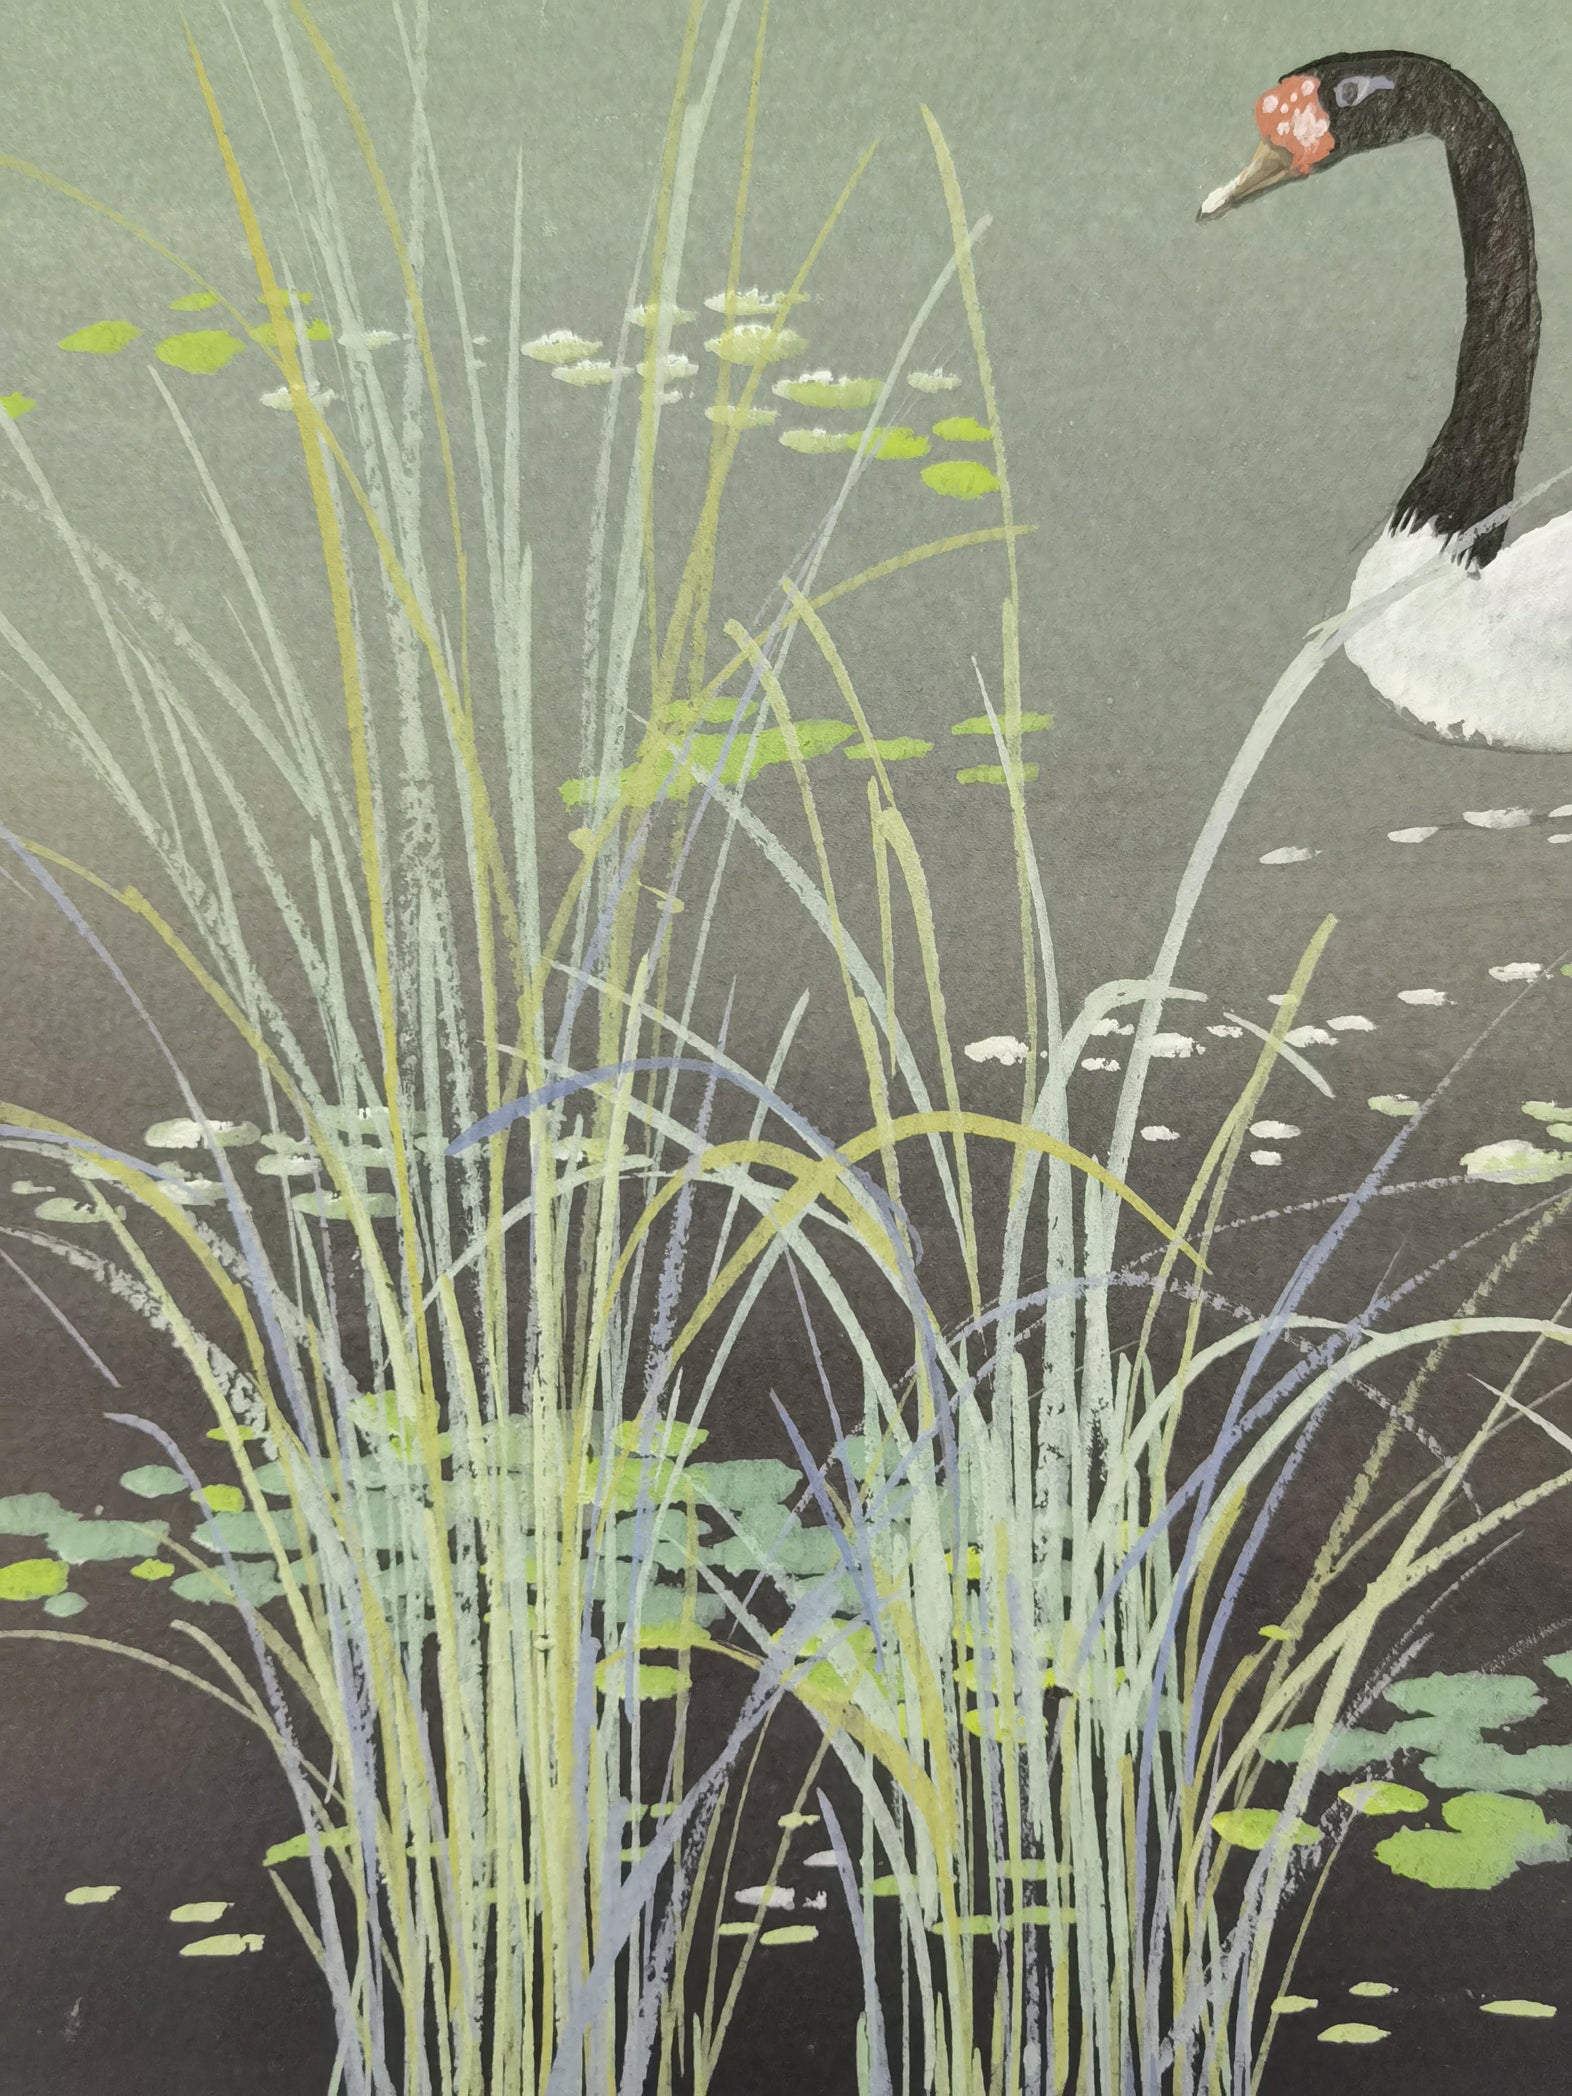 Black-necked Swan Vividland Handmade Art Printing Reed Duckweed Pond with Wood Frame